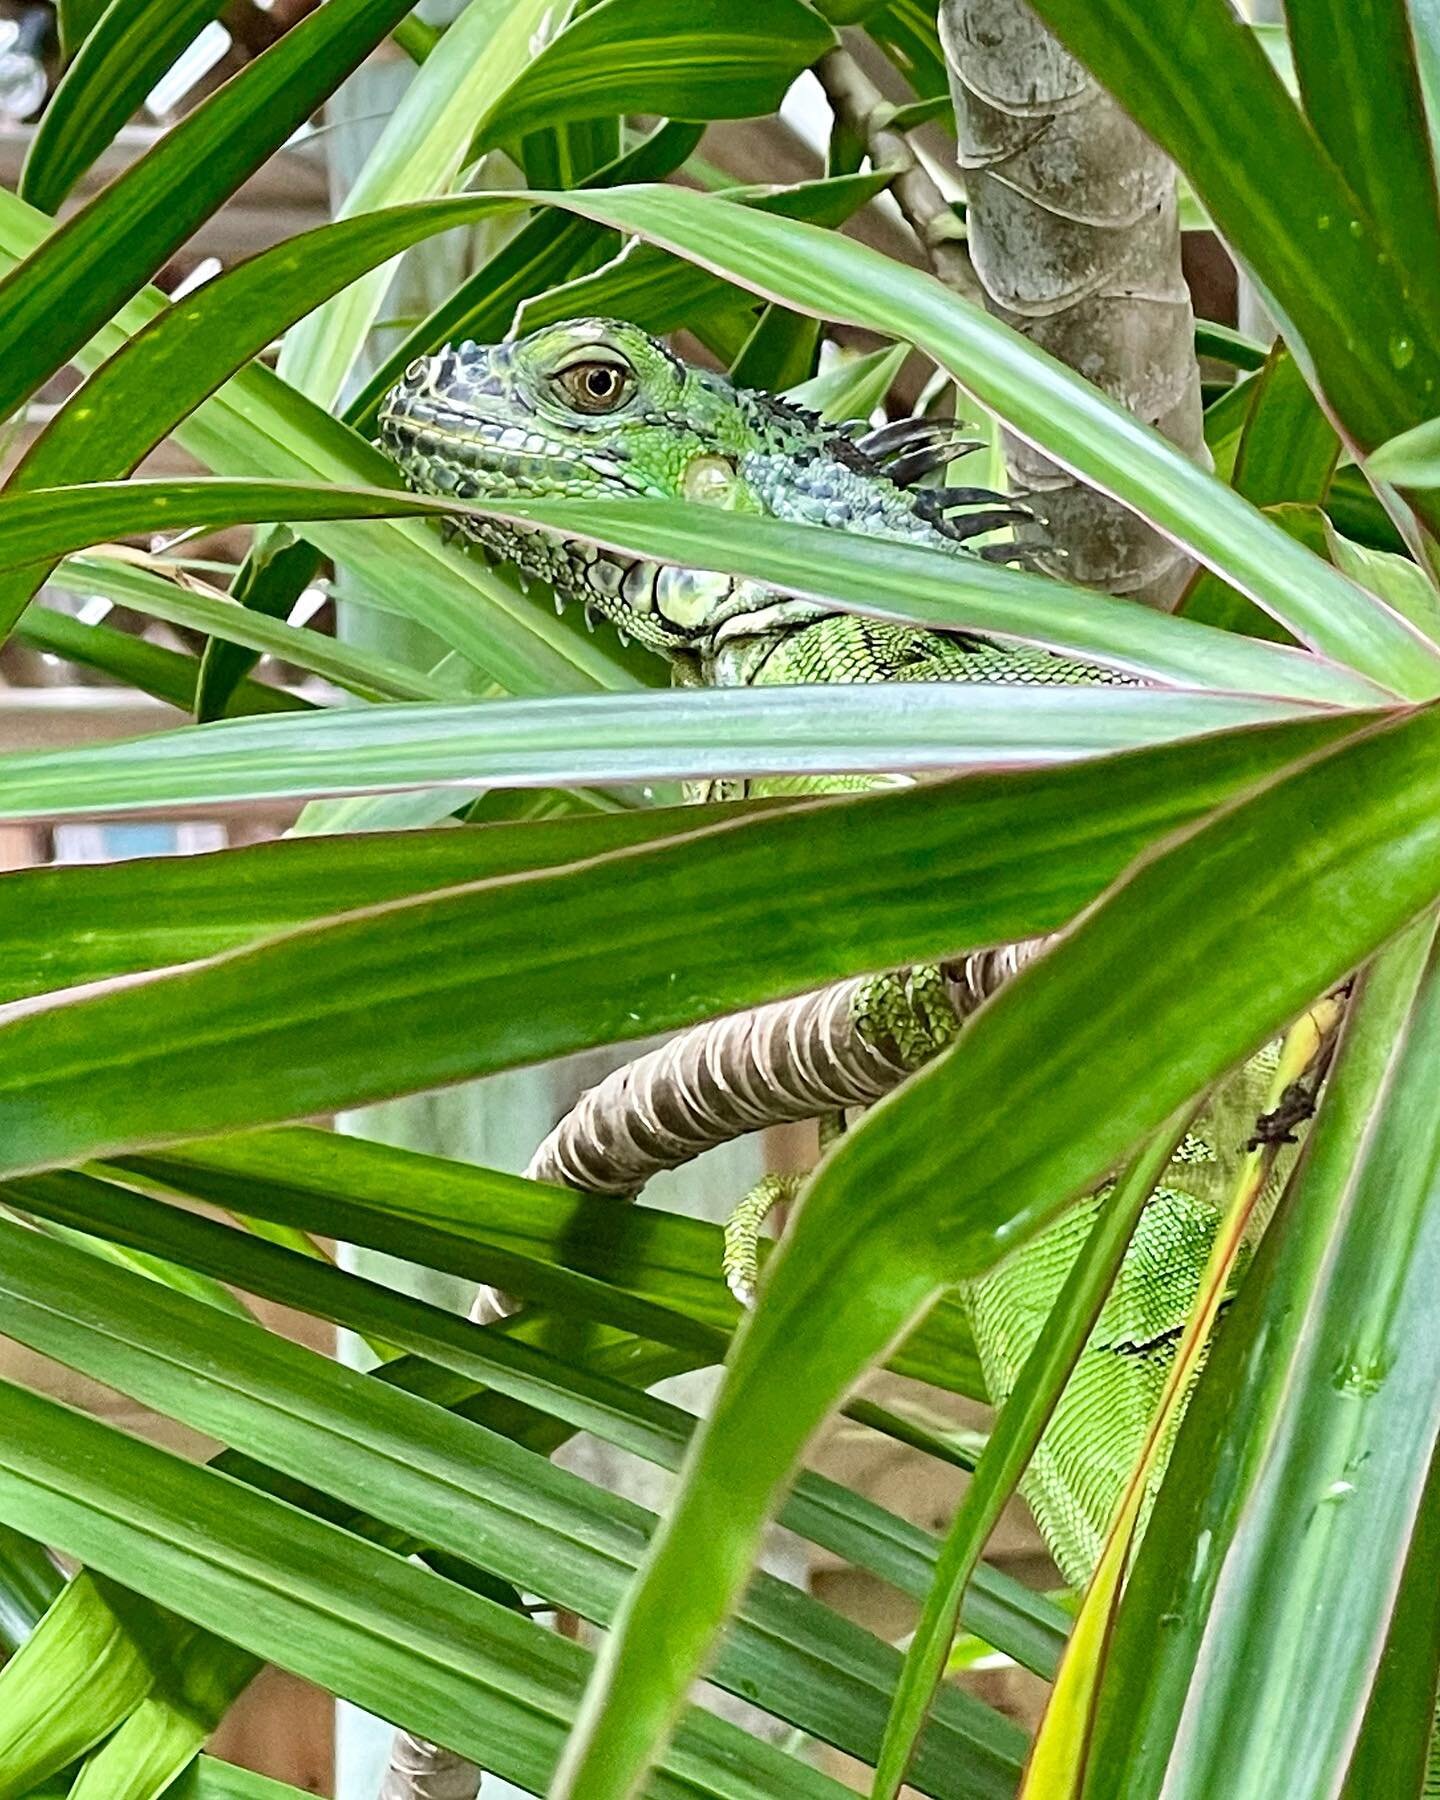 My wife&rsquo;s arch-nemesis deploying Key West camouflage. 
&bull;
&bull;
&bull;
&bull;
#nature #camo #keywest #hiding #realtree #keywestlife #paradise #instagood #sun #islandlife #southernmostpoint #keywestflorida #iguana #iguanas #lizard #reptiles